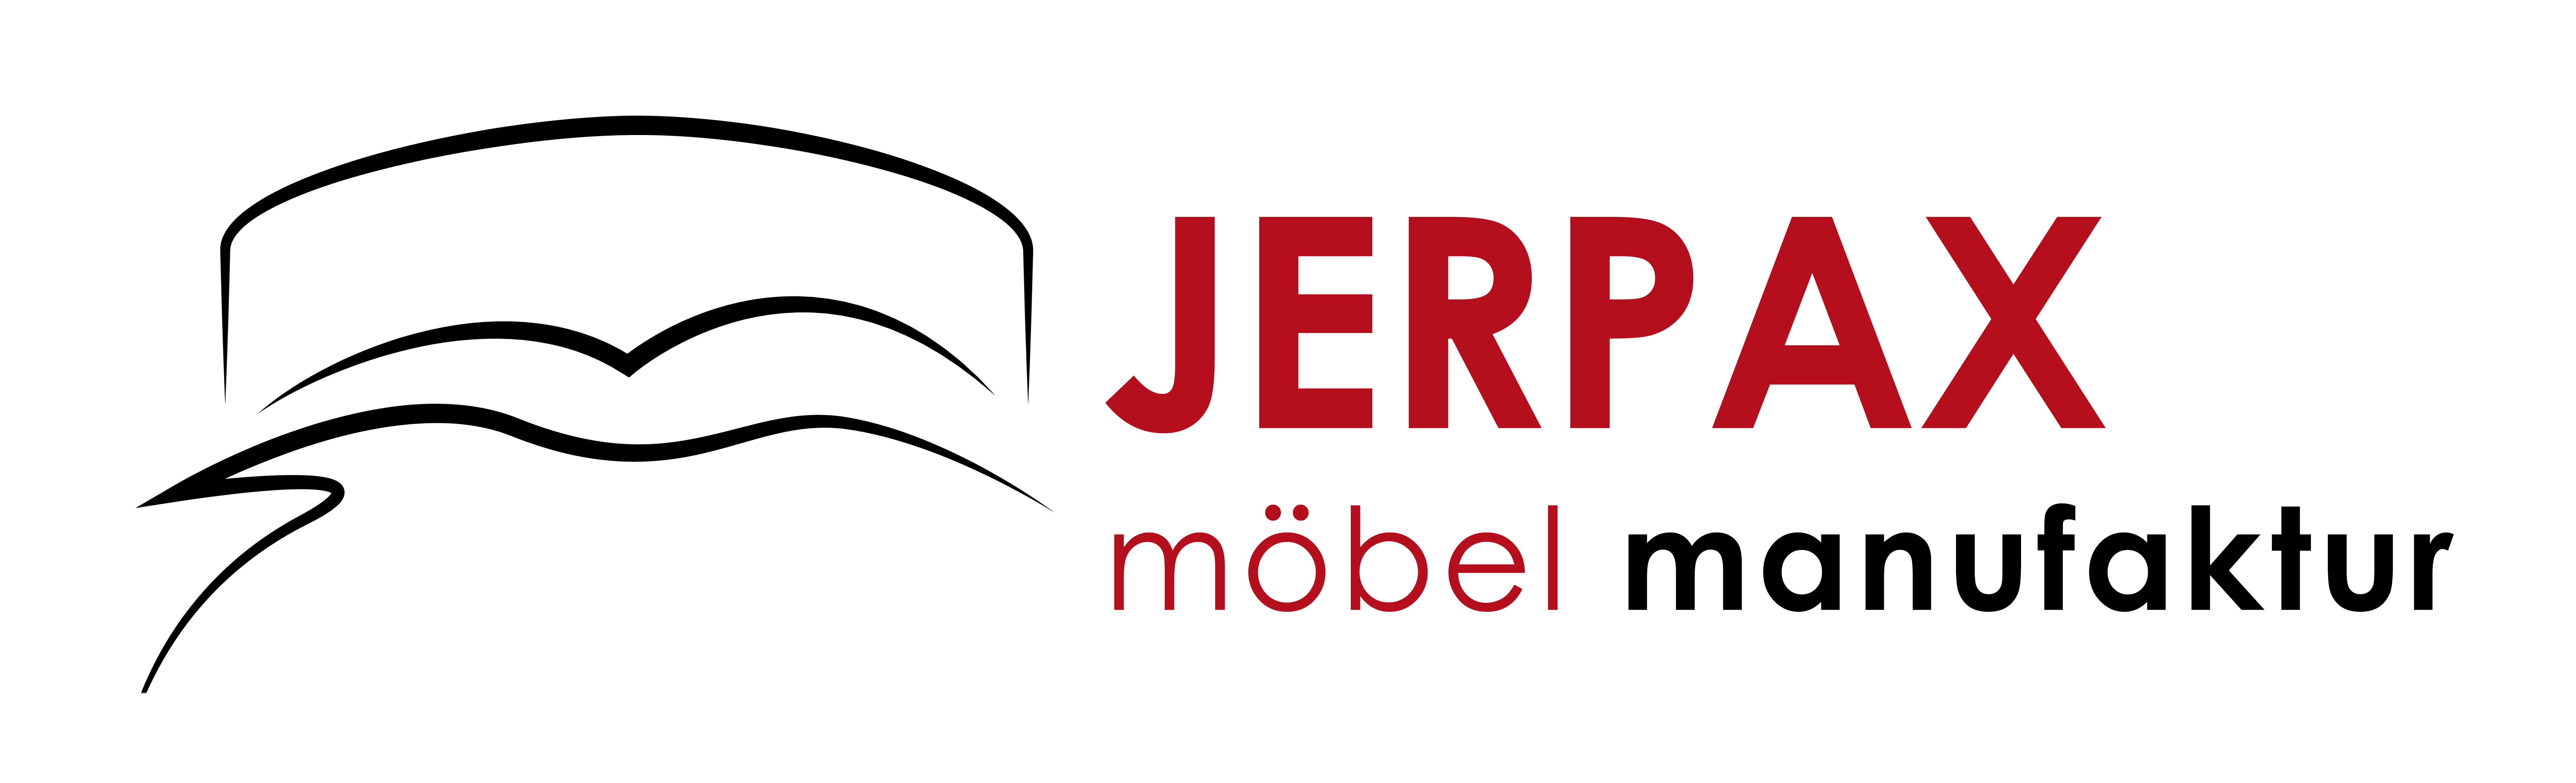 Jerpax logo